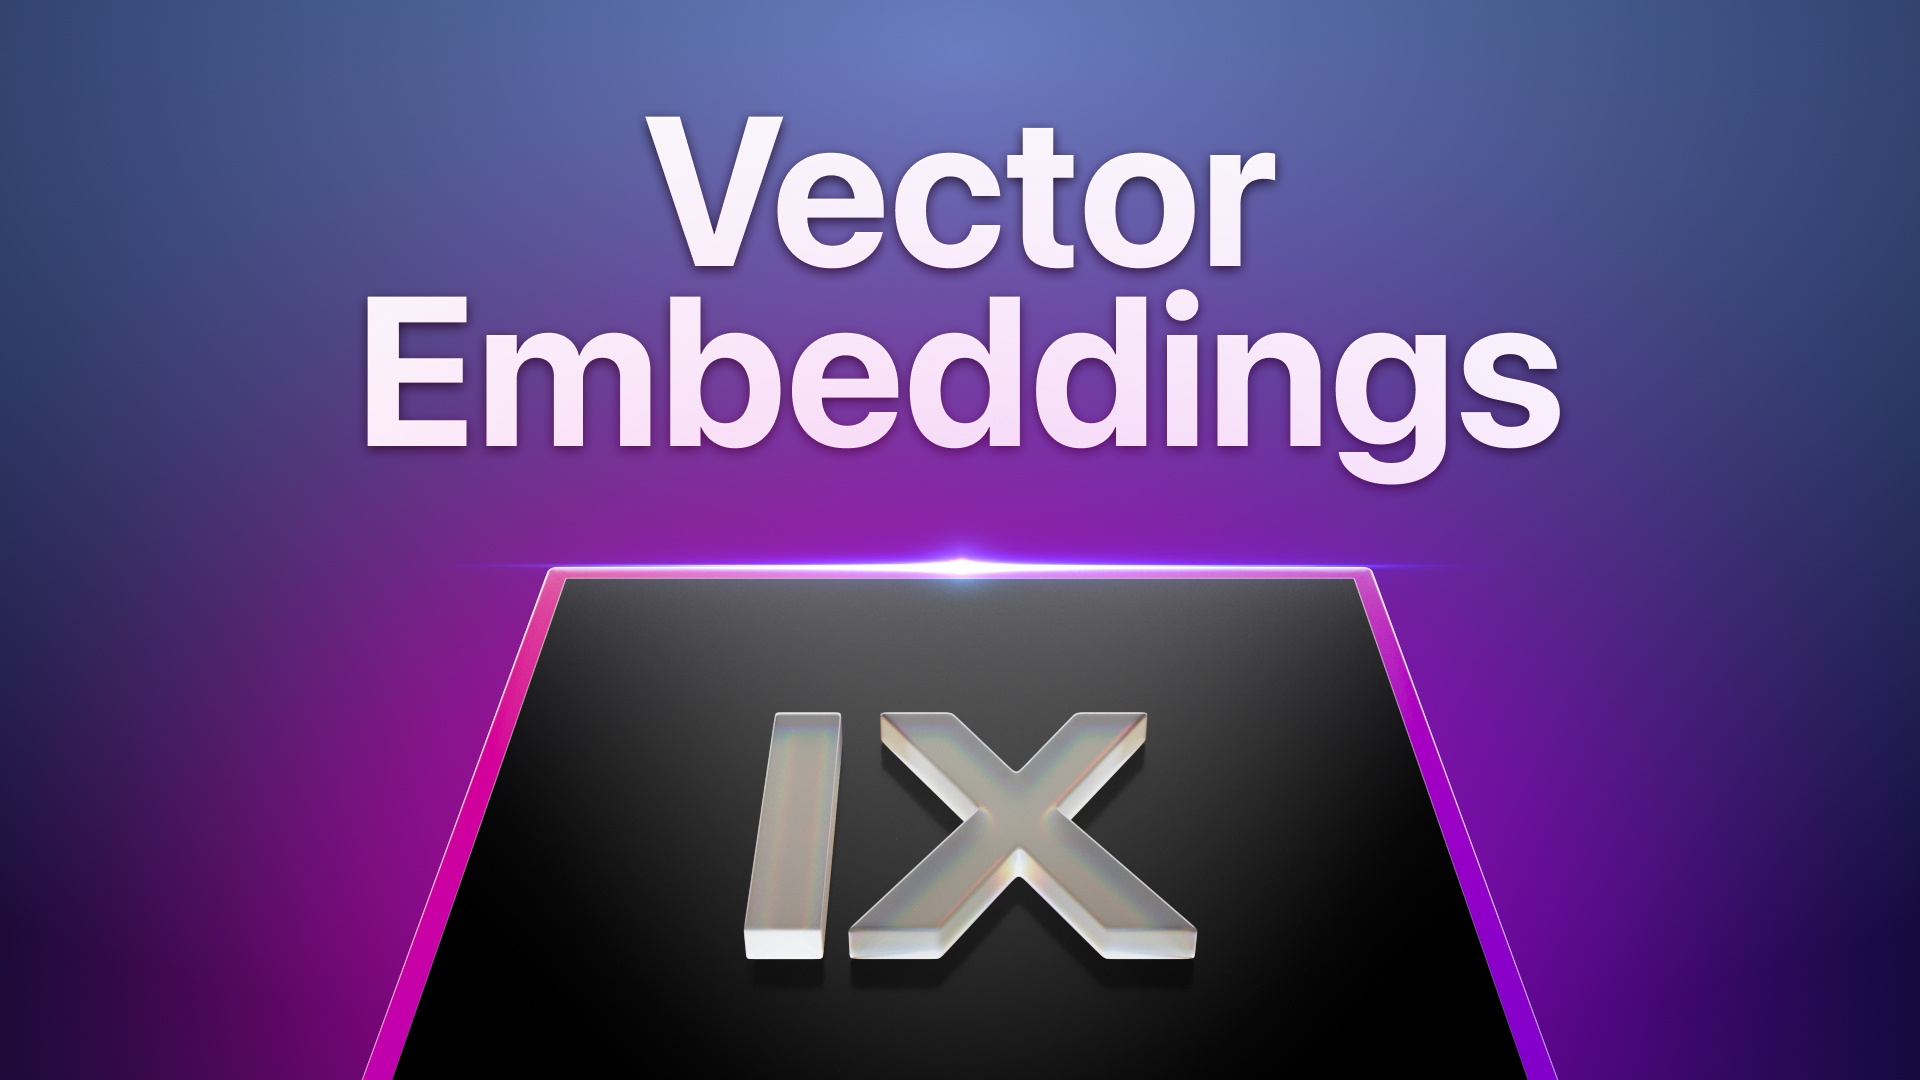 Vector Embeddings